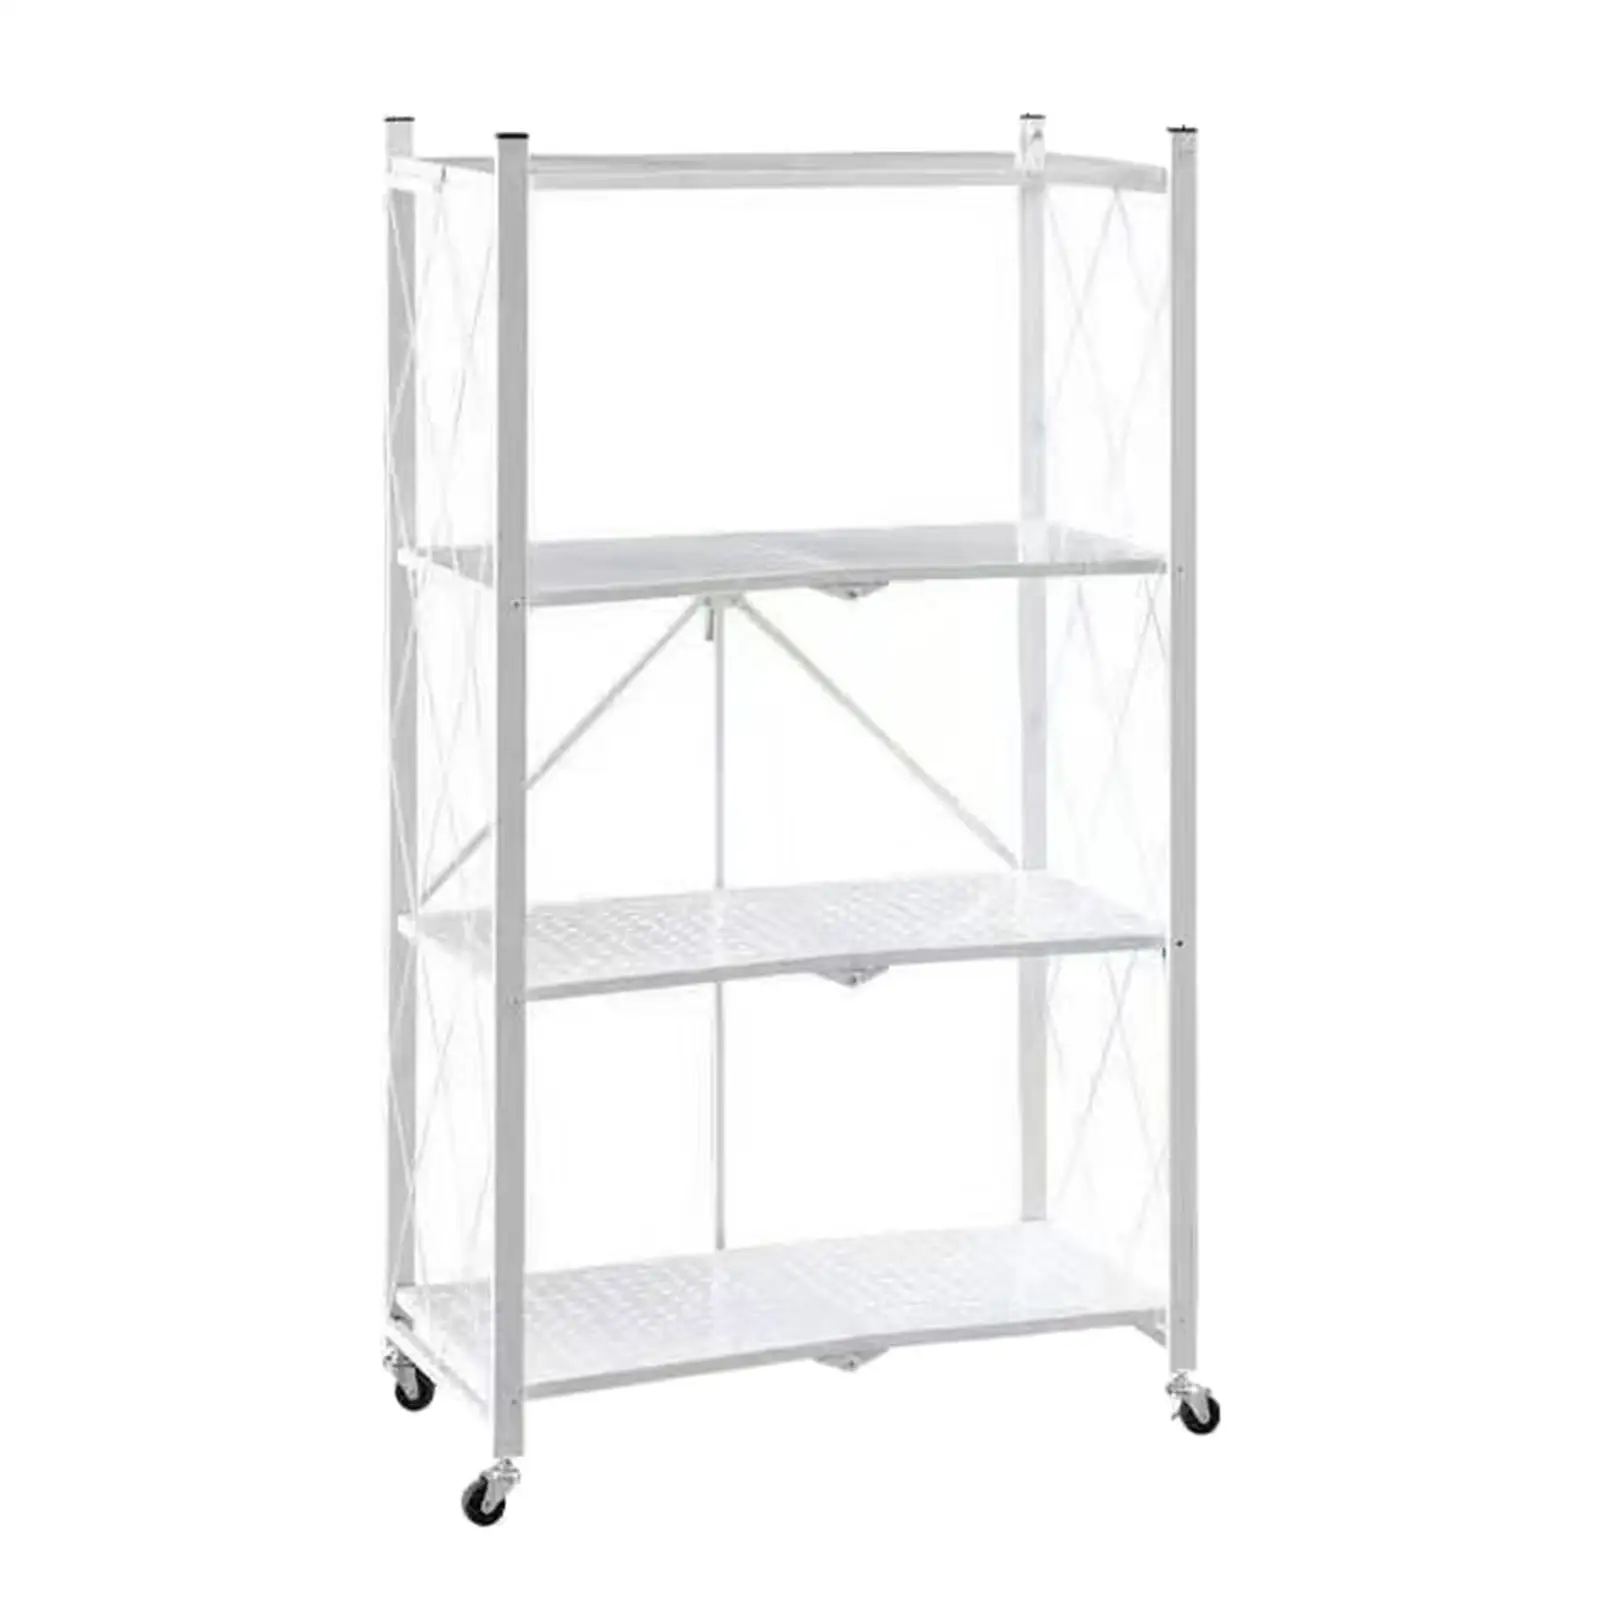 Foldable Bookshelf Display Shelving Units Organization Cart Organizer Corner Shelf Kitchen Cart with Caster Wheels for Home